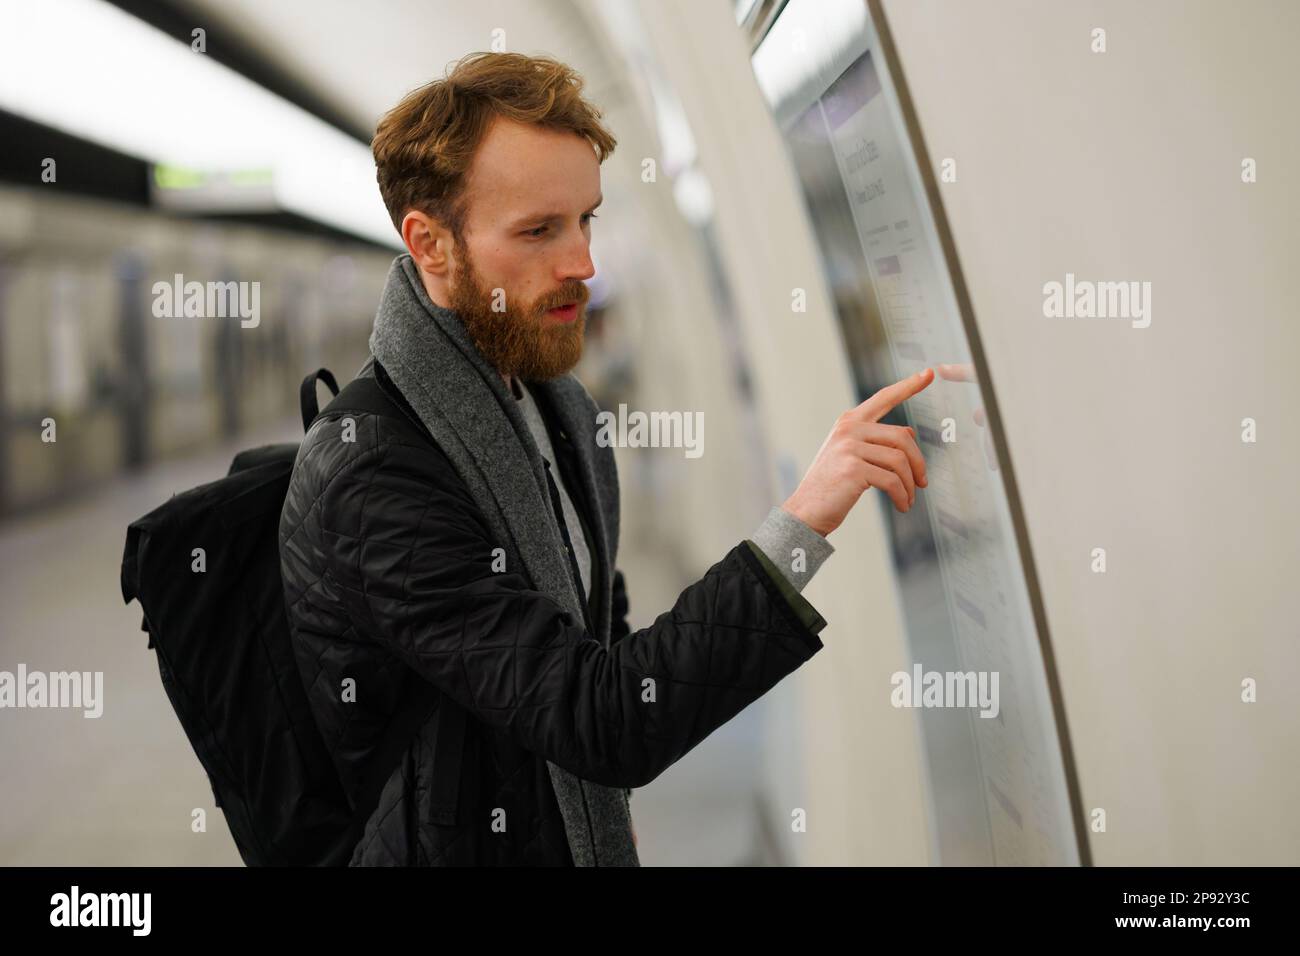 Bearded man looks at a subway train map Stock Photo